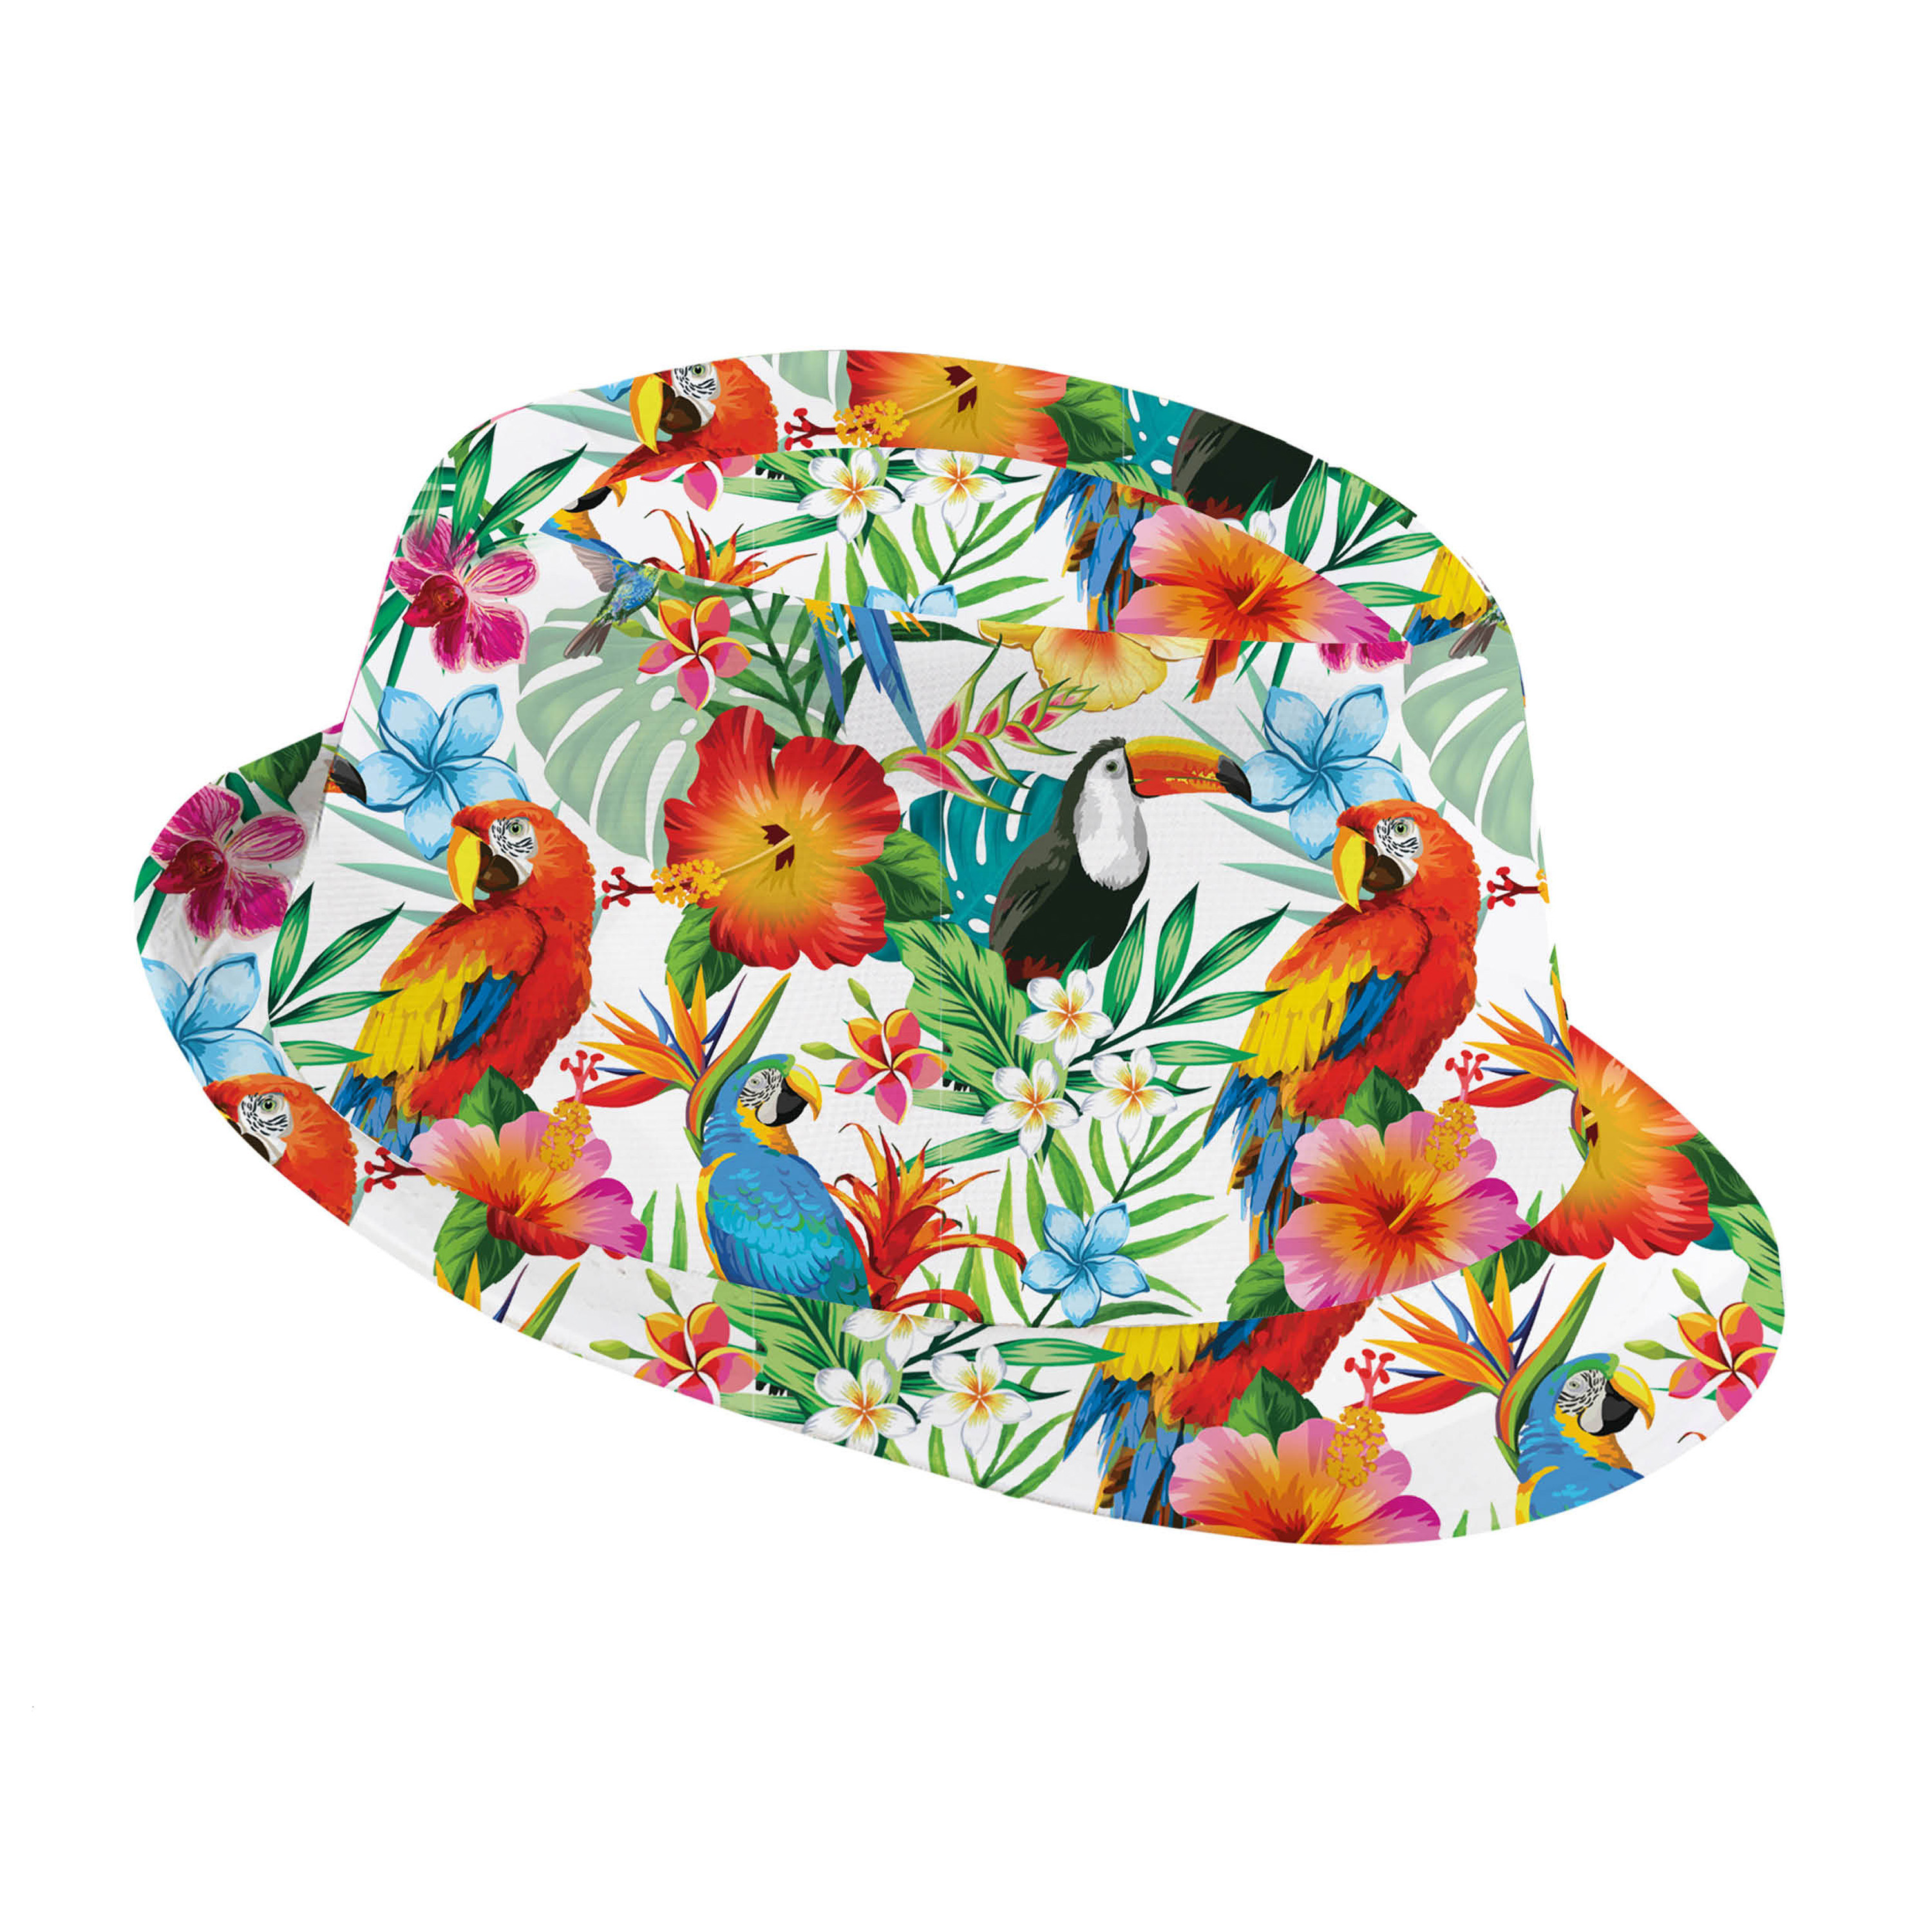 Toppers - Verkleed hoedje voor Tropical Hawaii party - Summer/jungle print - volwassenen - Carnaval/thema fees